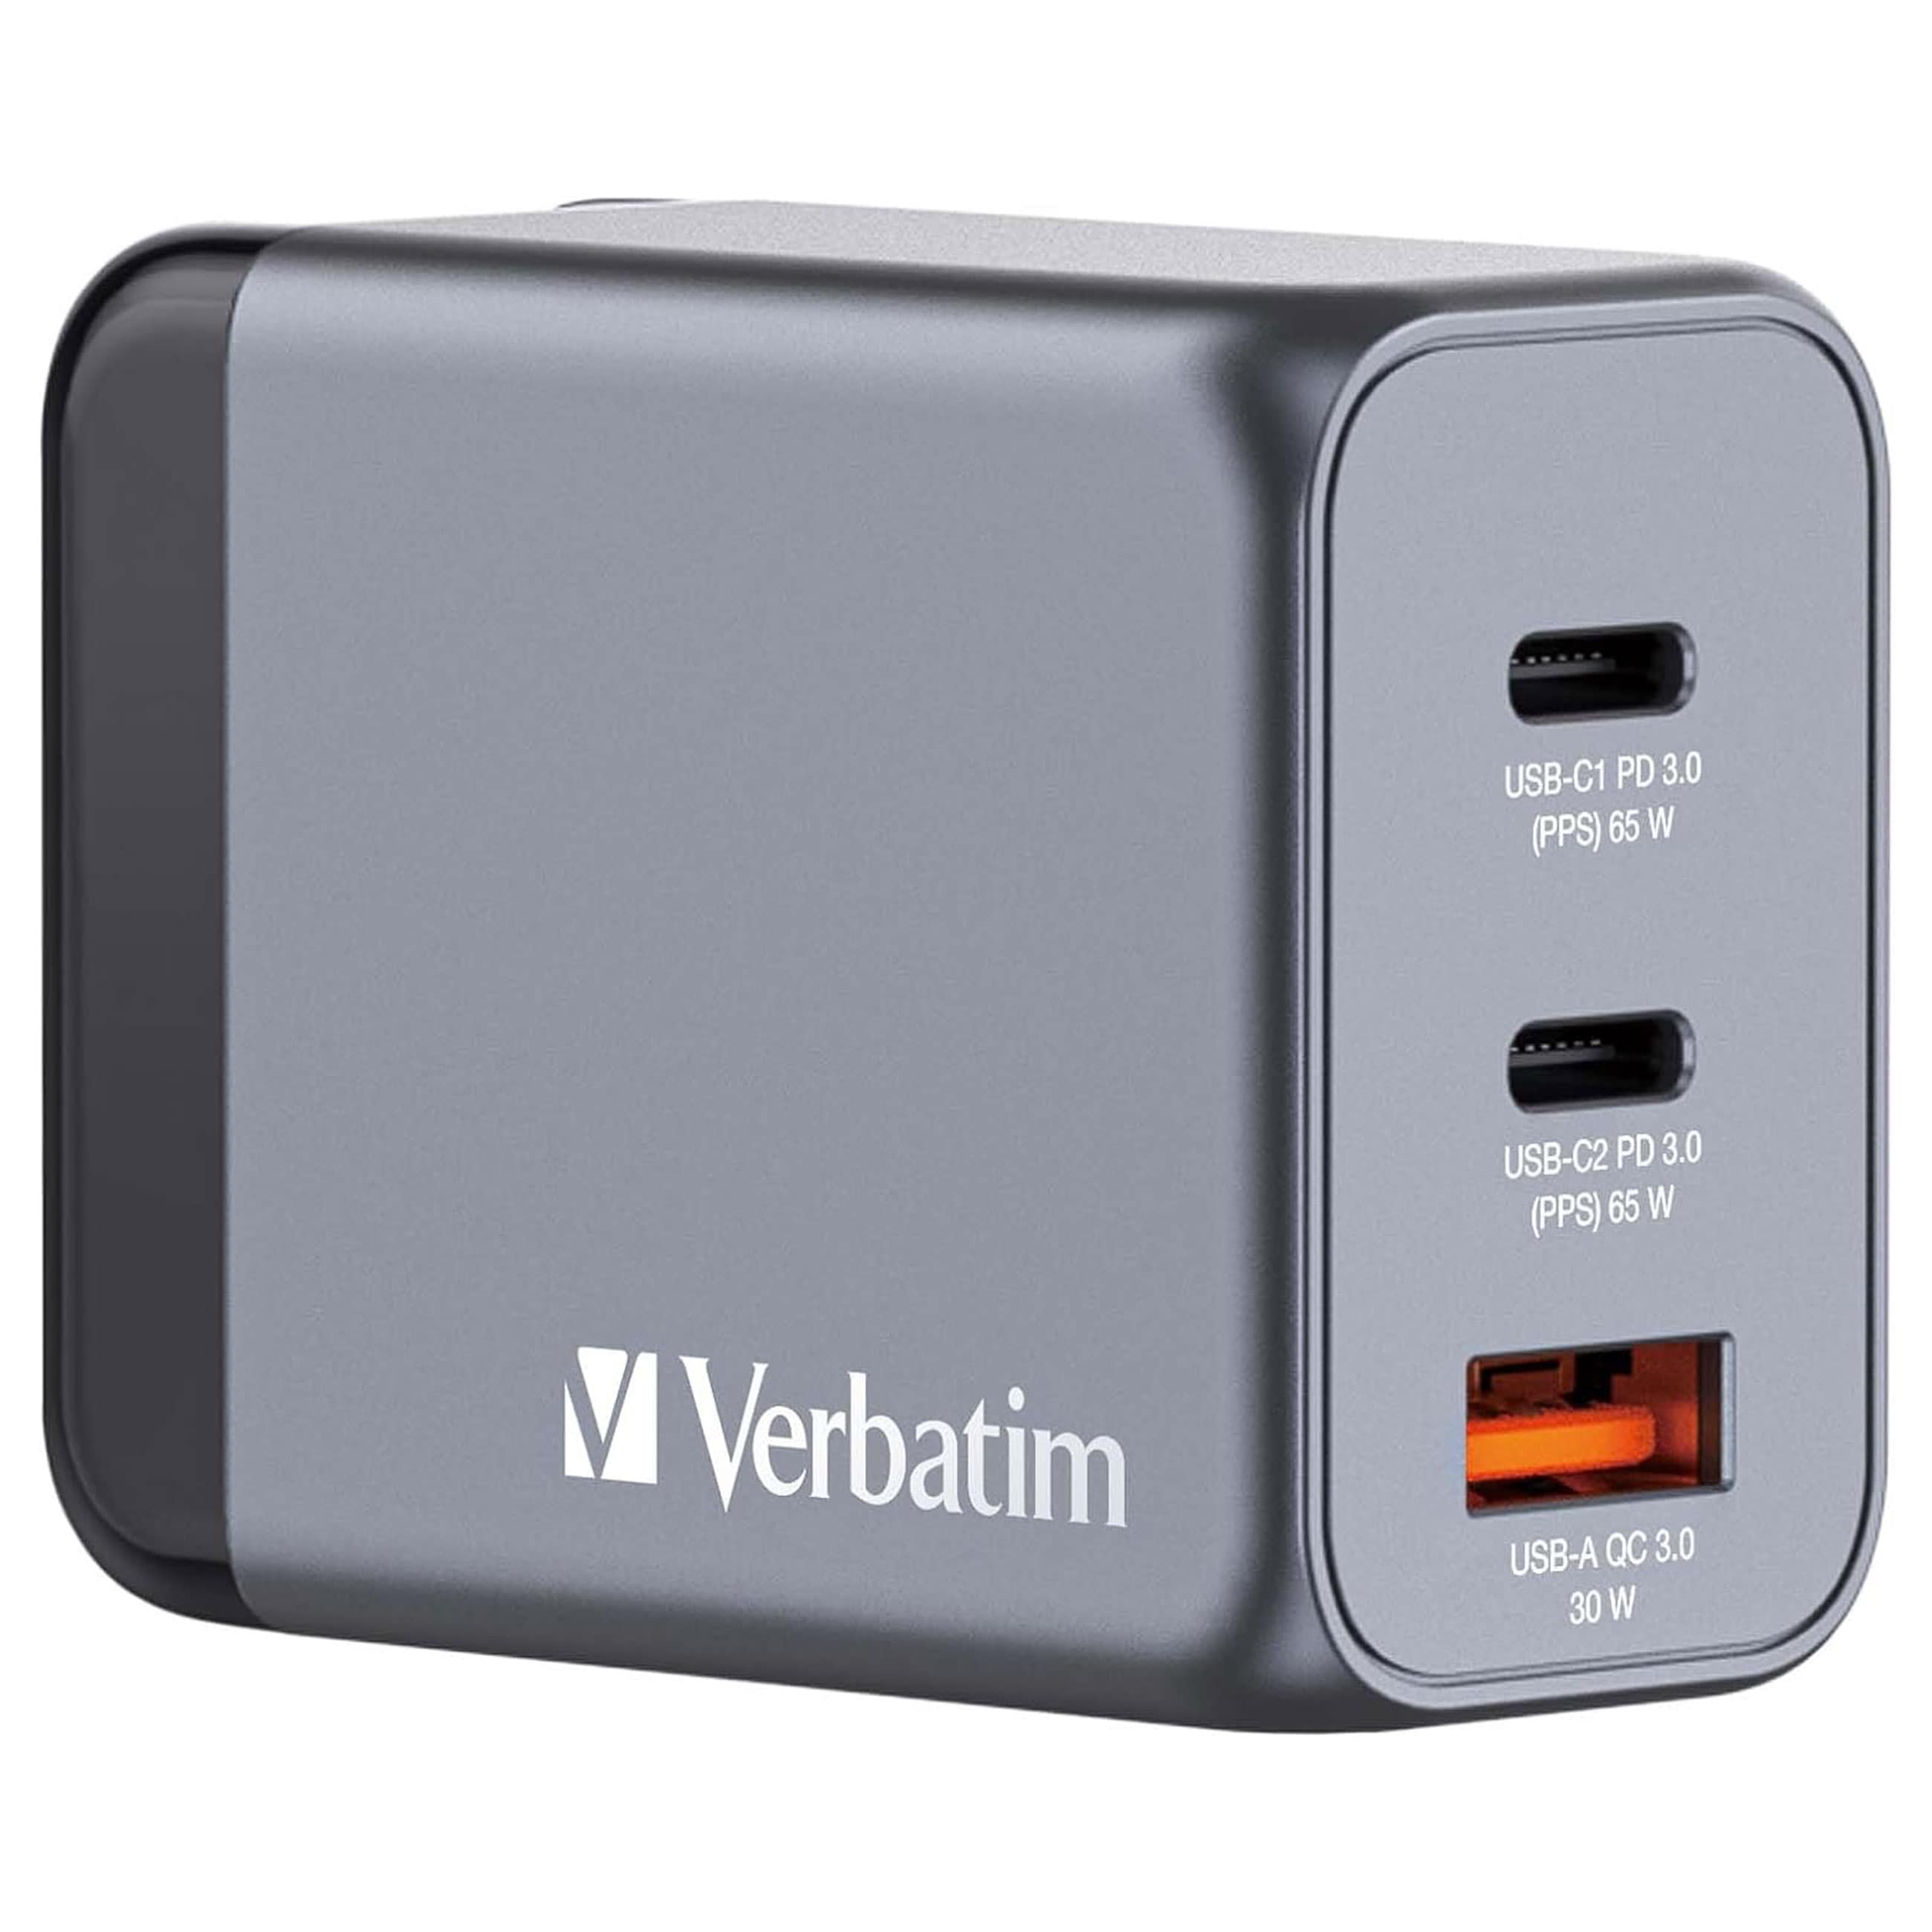 Verbatim GaN Charger 65 Watt für Laptops, Tablets, Smartphones - 3-in-1 Schnellladegerät inkl. EU-, UK-, USA-Anschluss